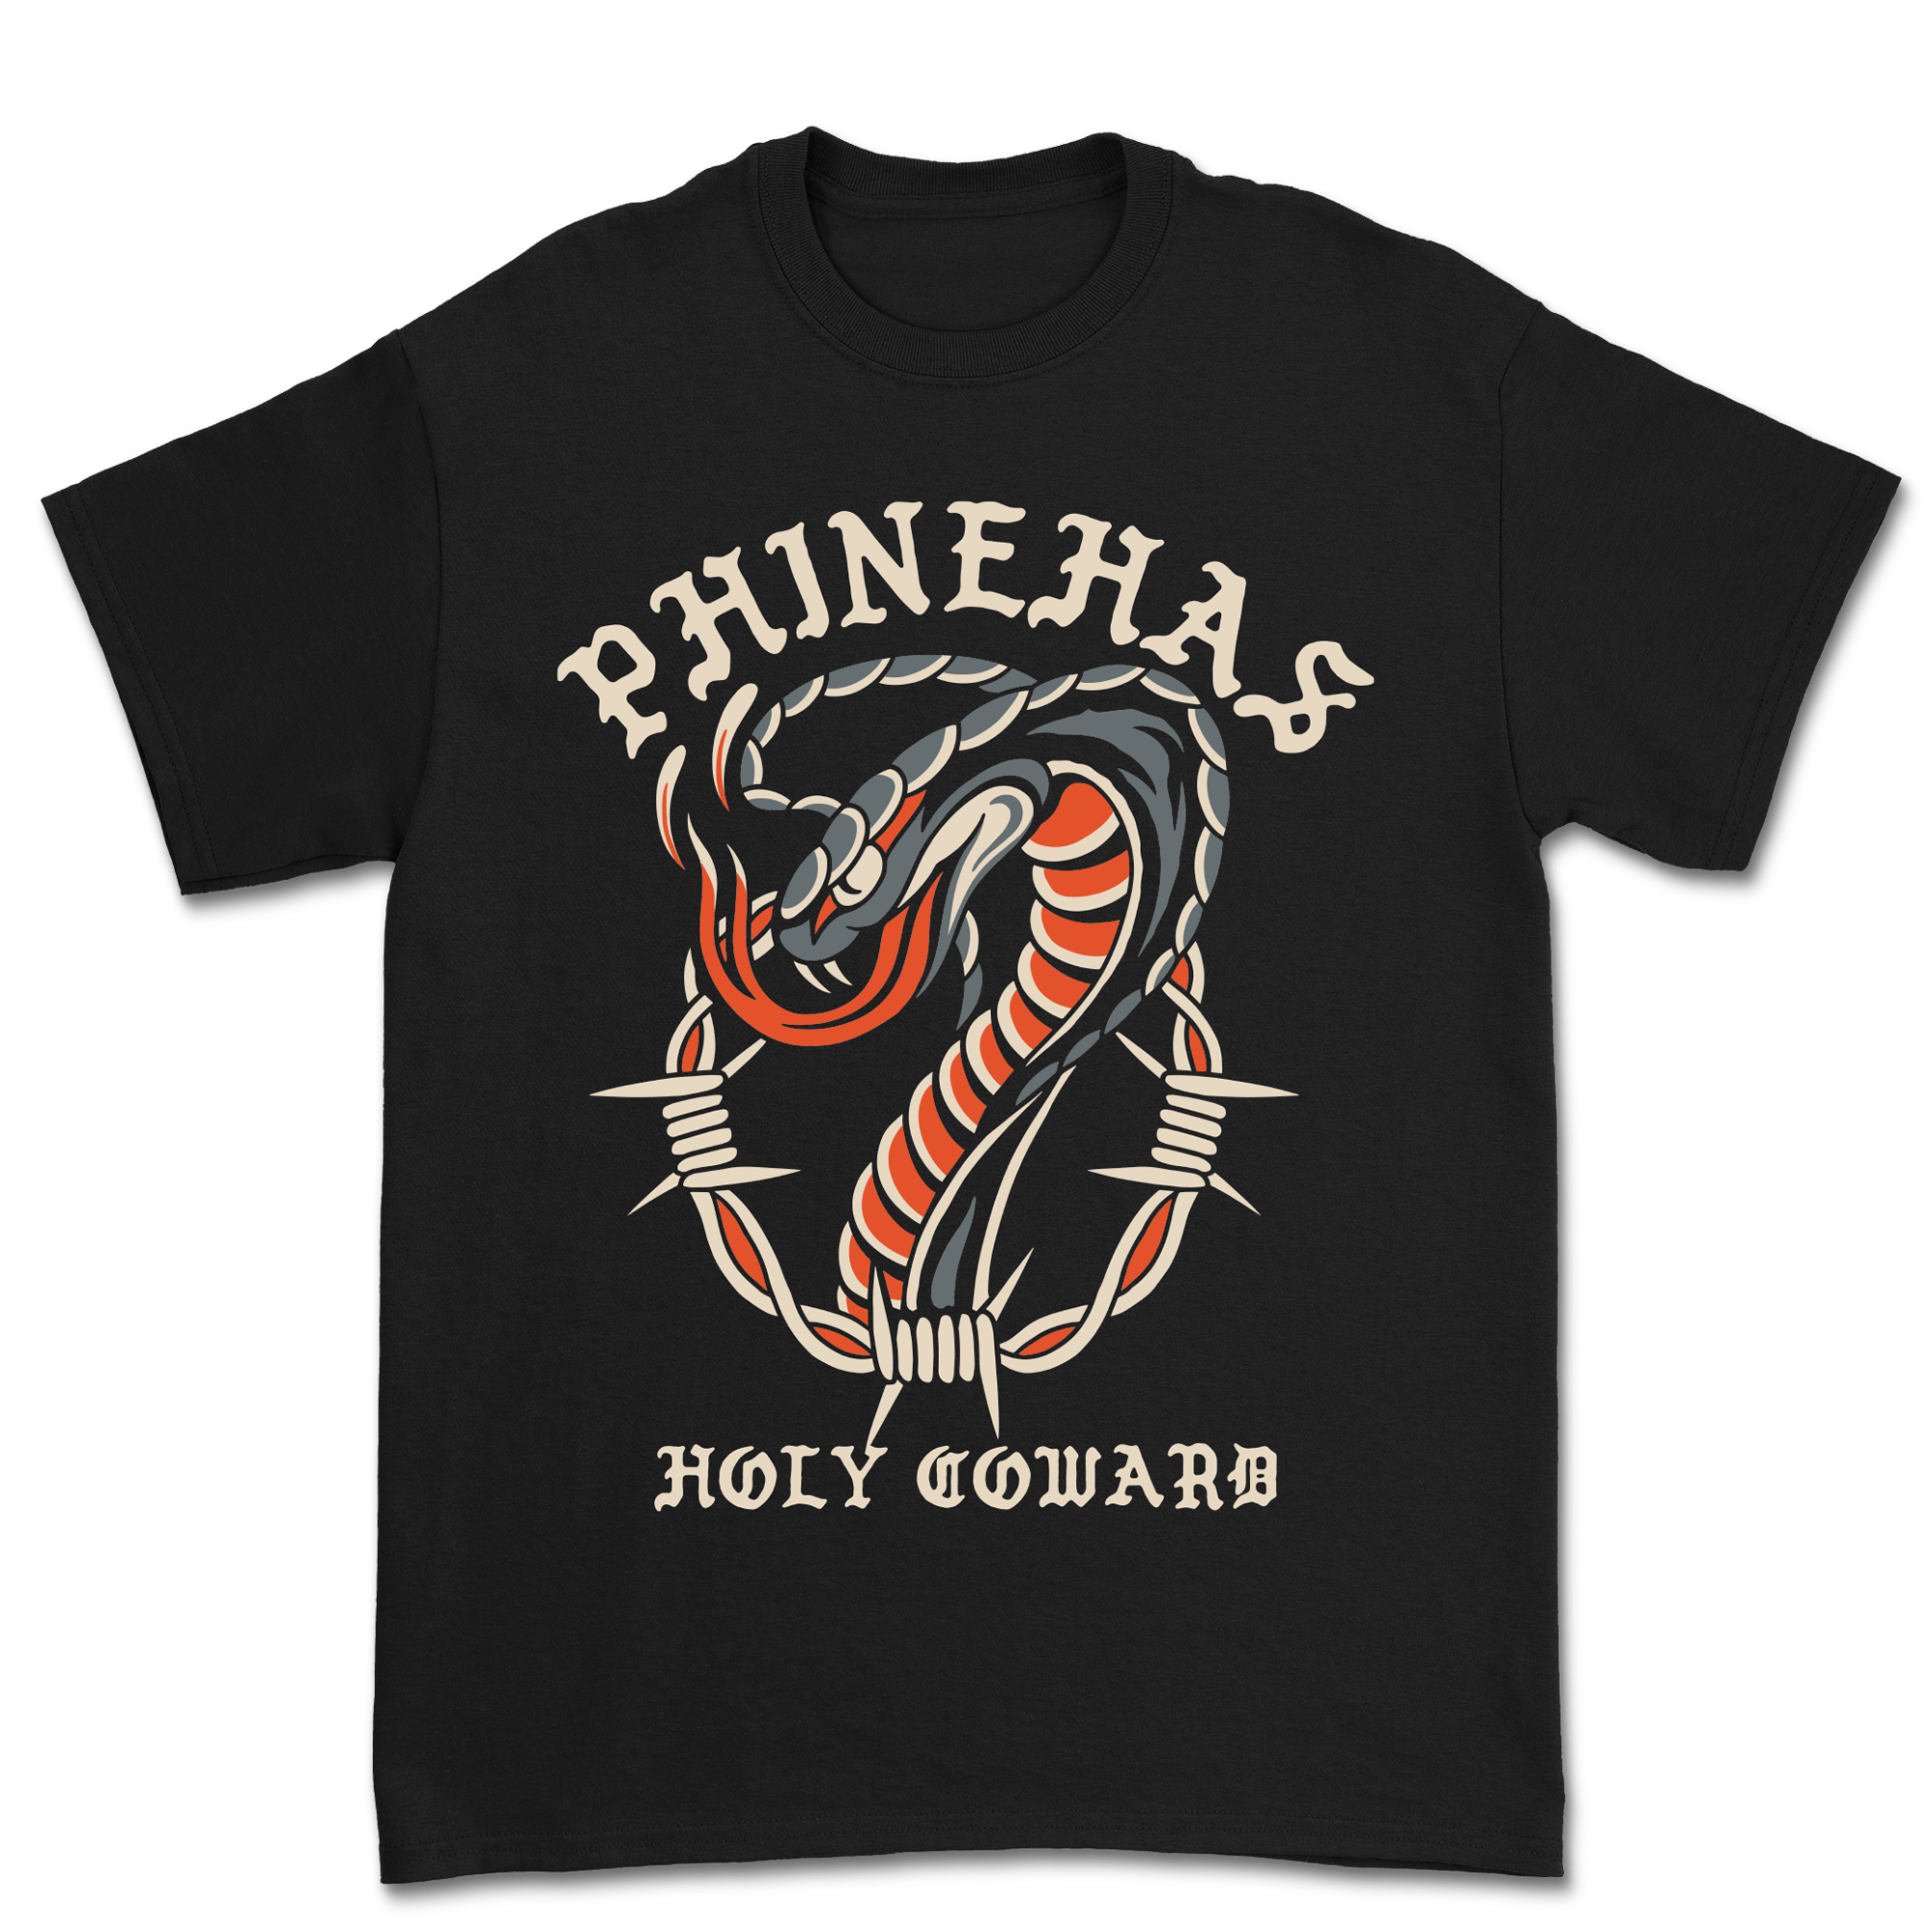 Phinehas - Holy Coward Tee